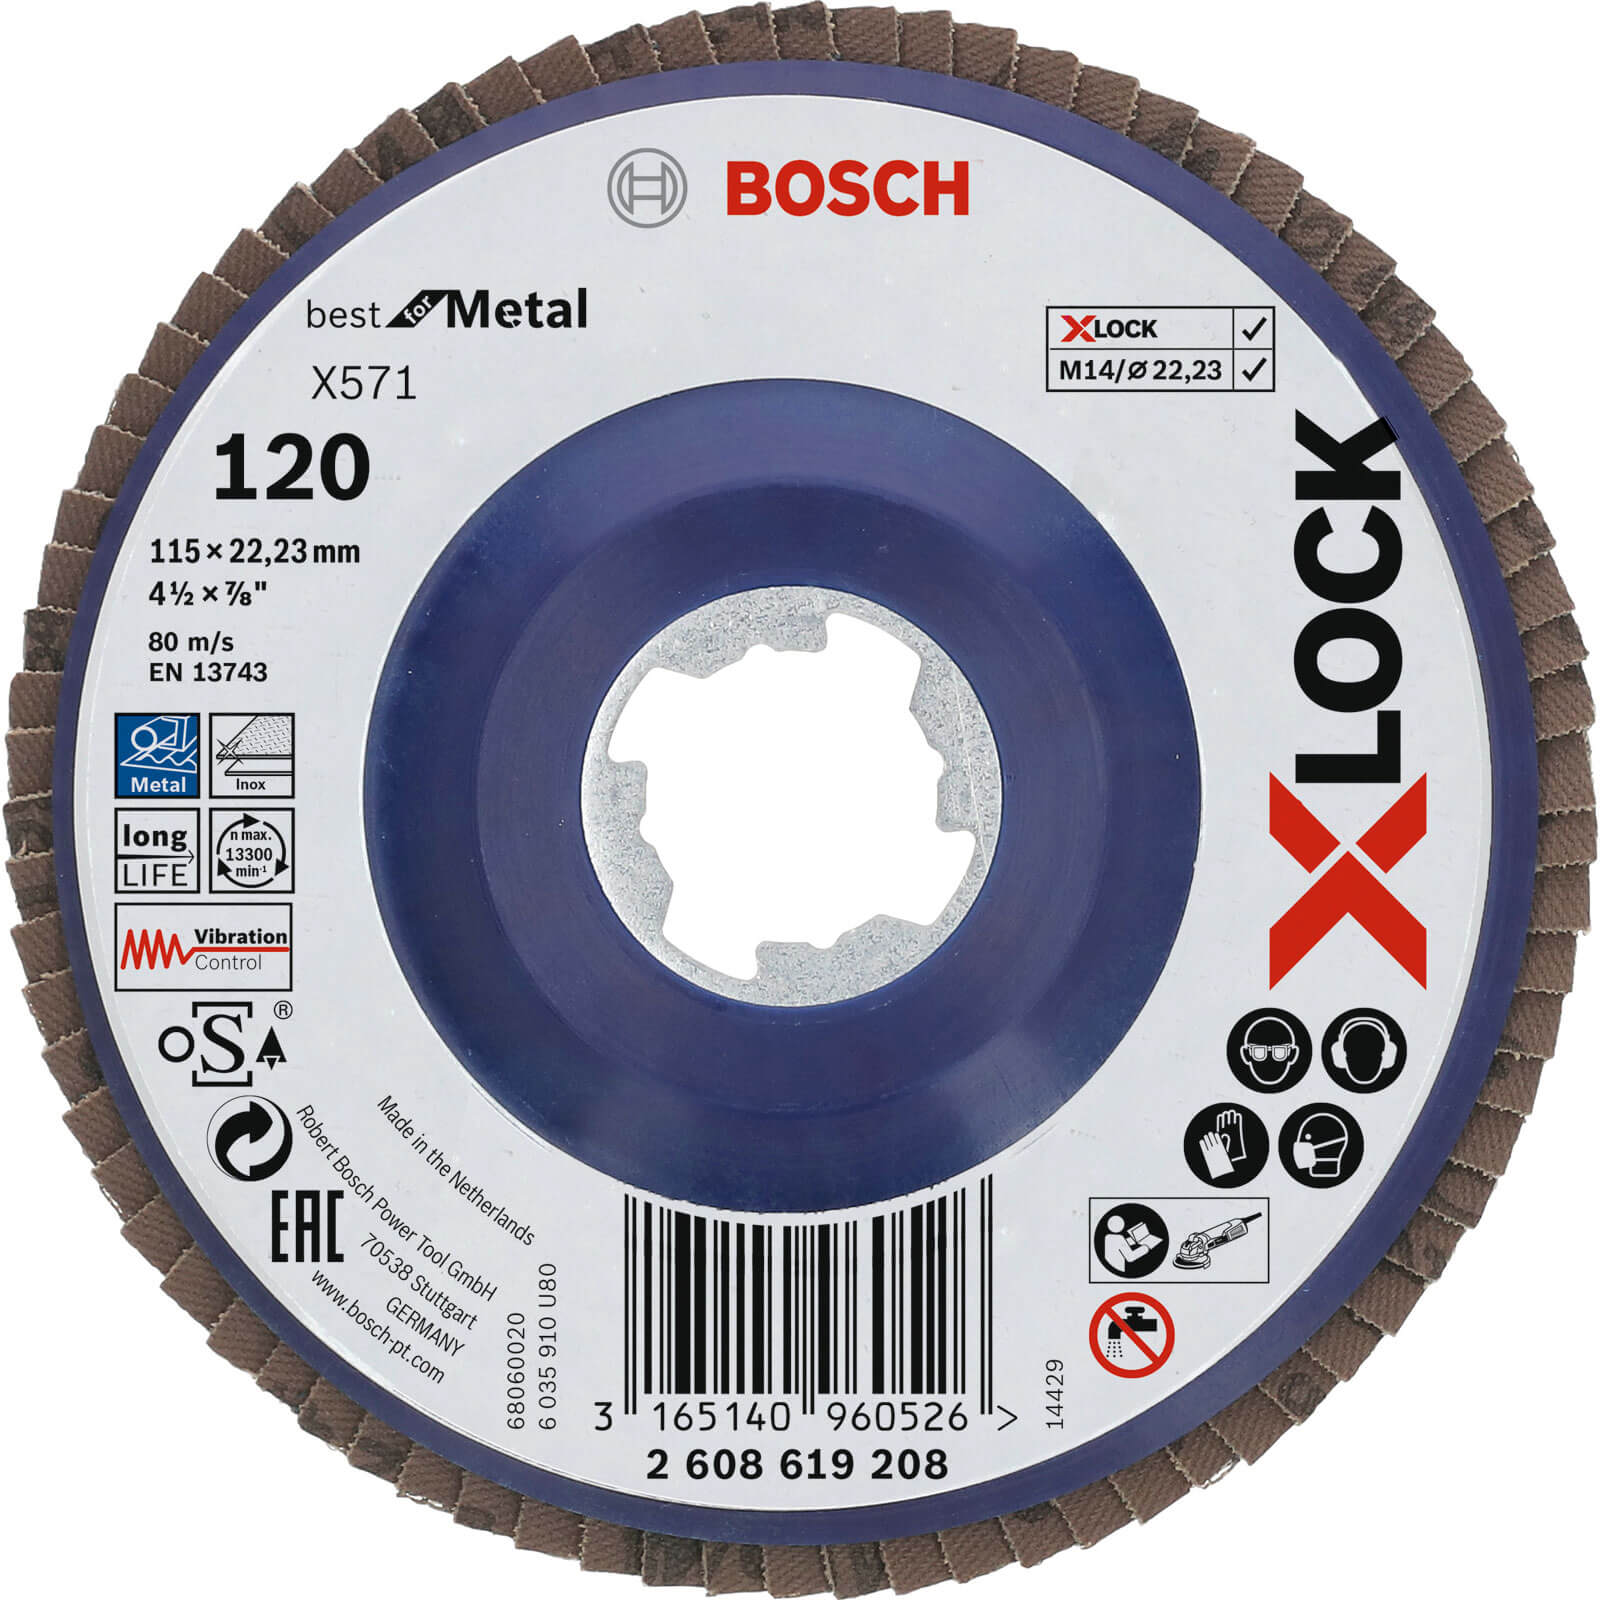 Image of Bosch X Lock Zirconium Abrasive Straight Flap Disc 115mm 120g Pack of 1